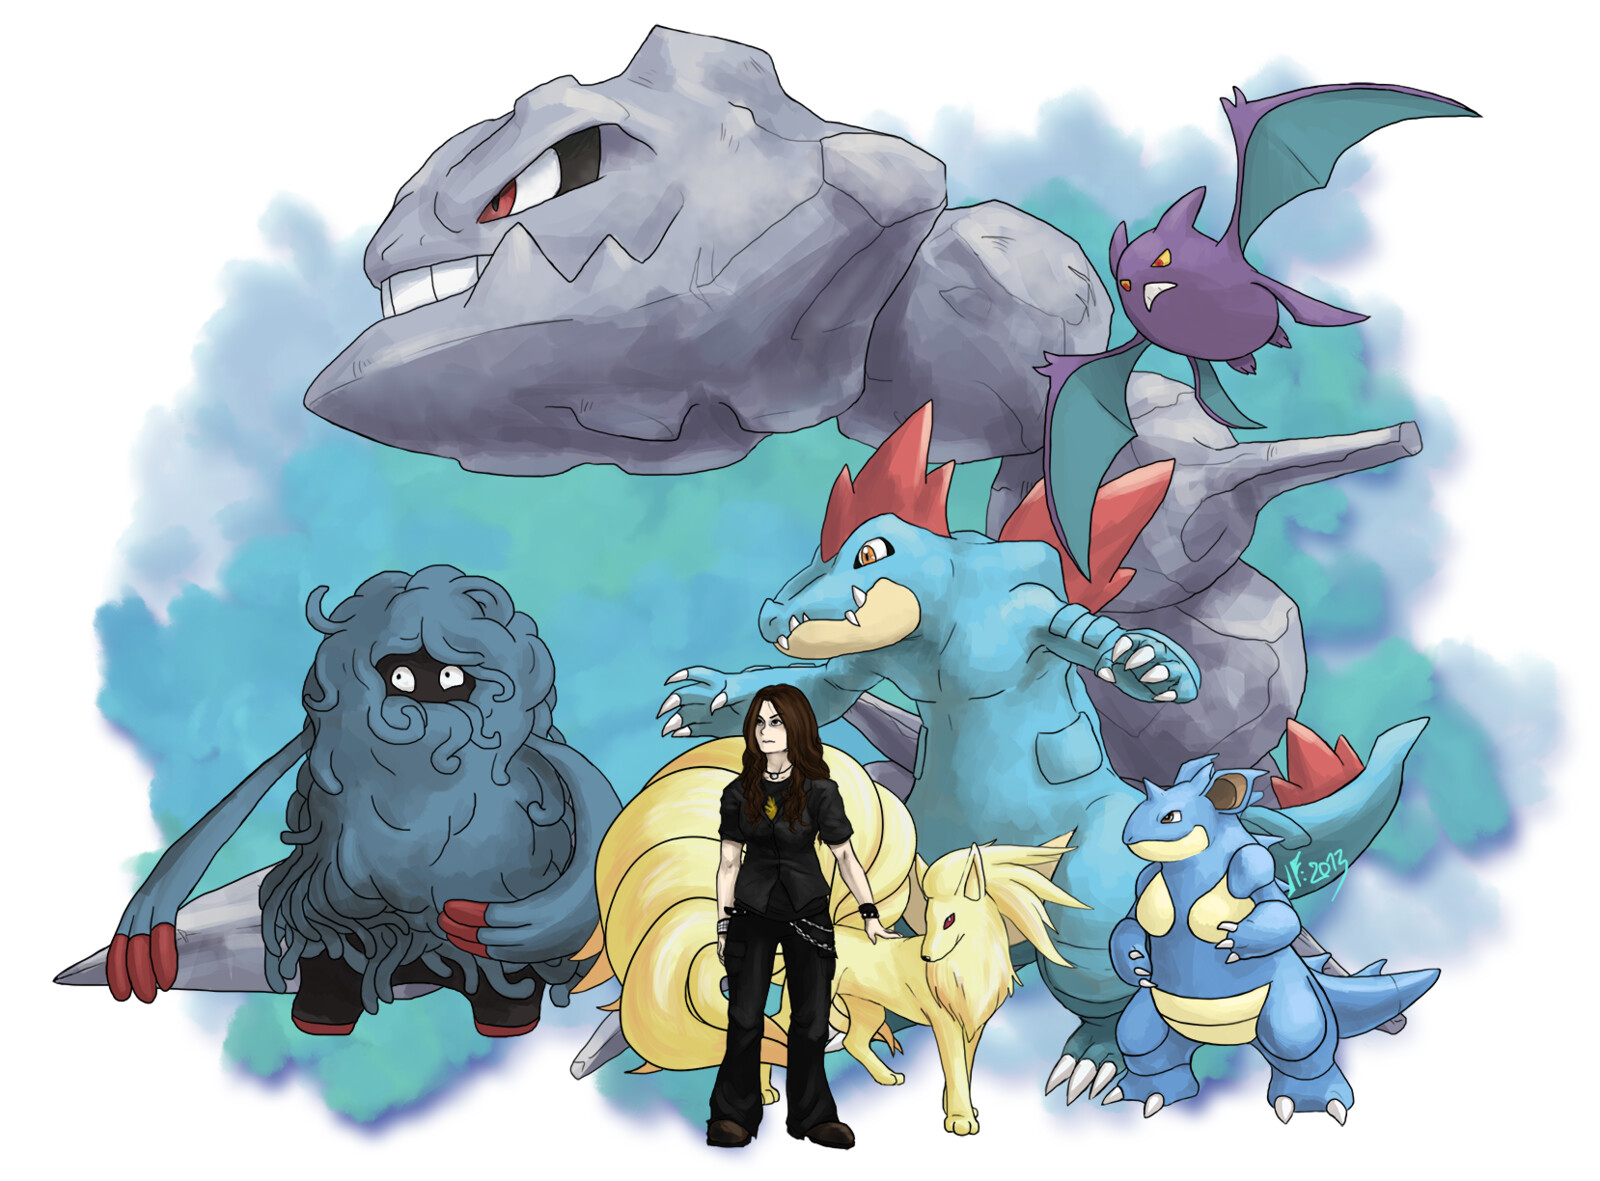 Pokemon teams and illustrations.